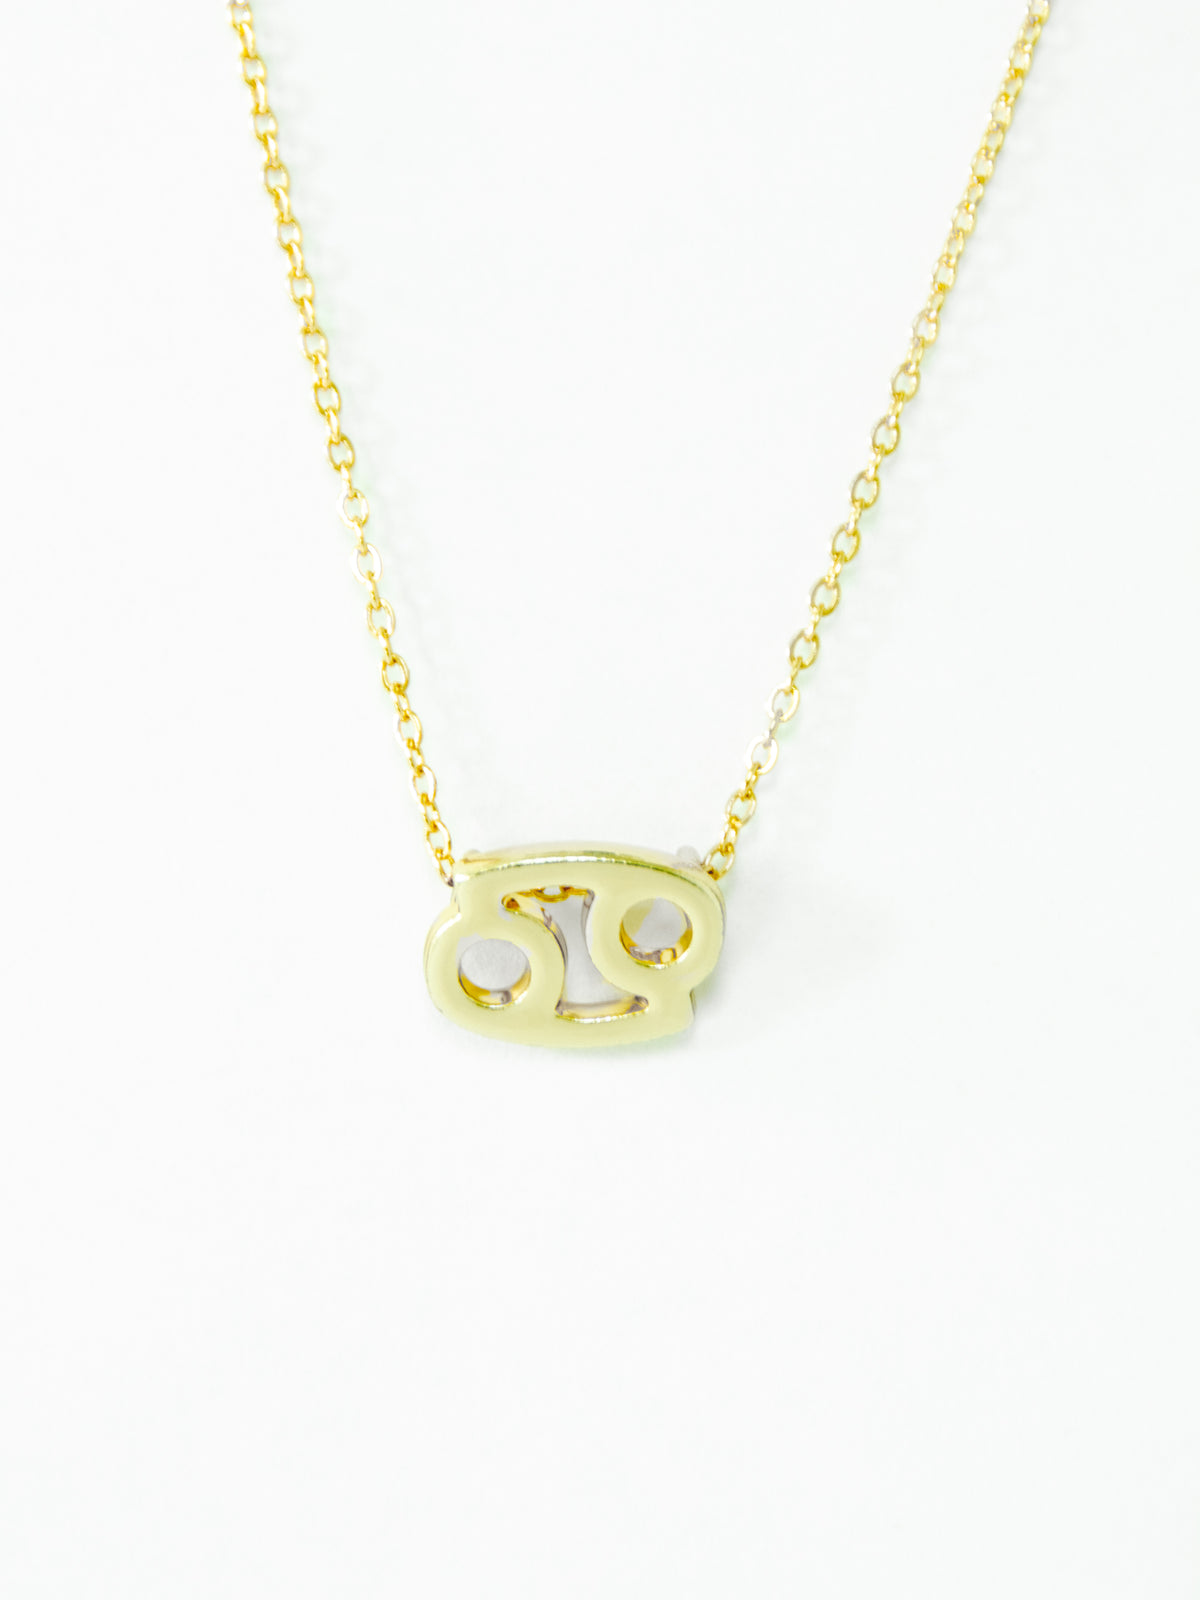 Zodiac Astrological cancer Gold Necklace Dainty Minimalist Celestial,Constellation Jewelry, Astrology Jewelry